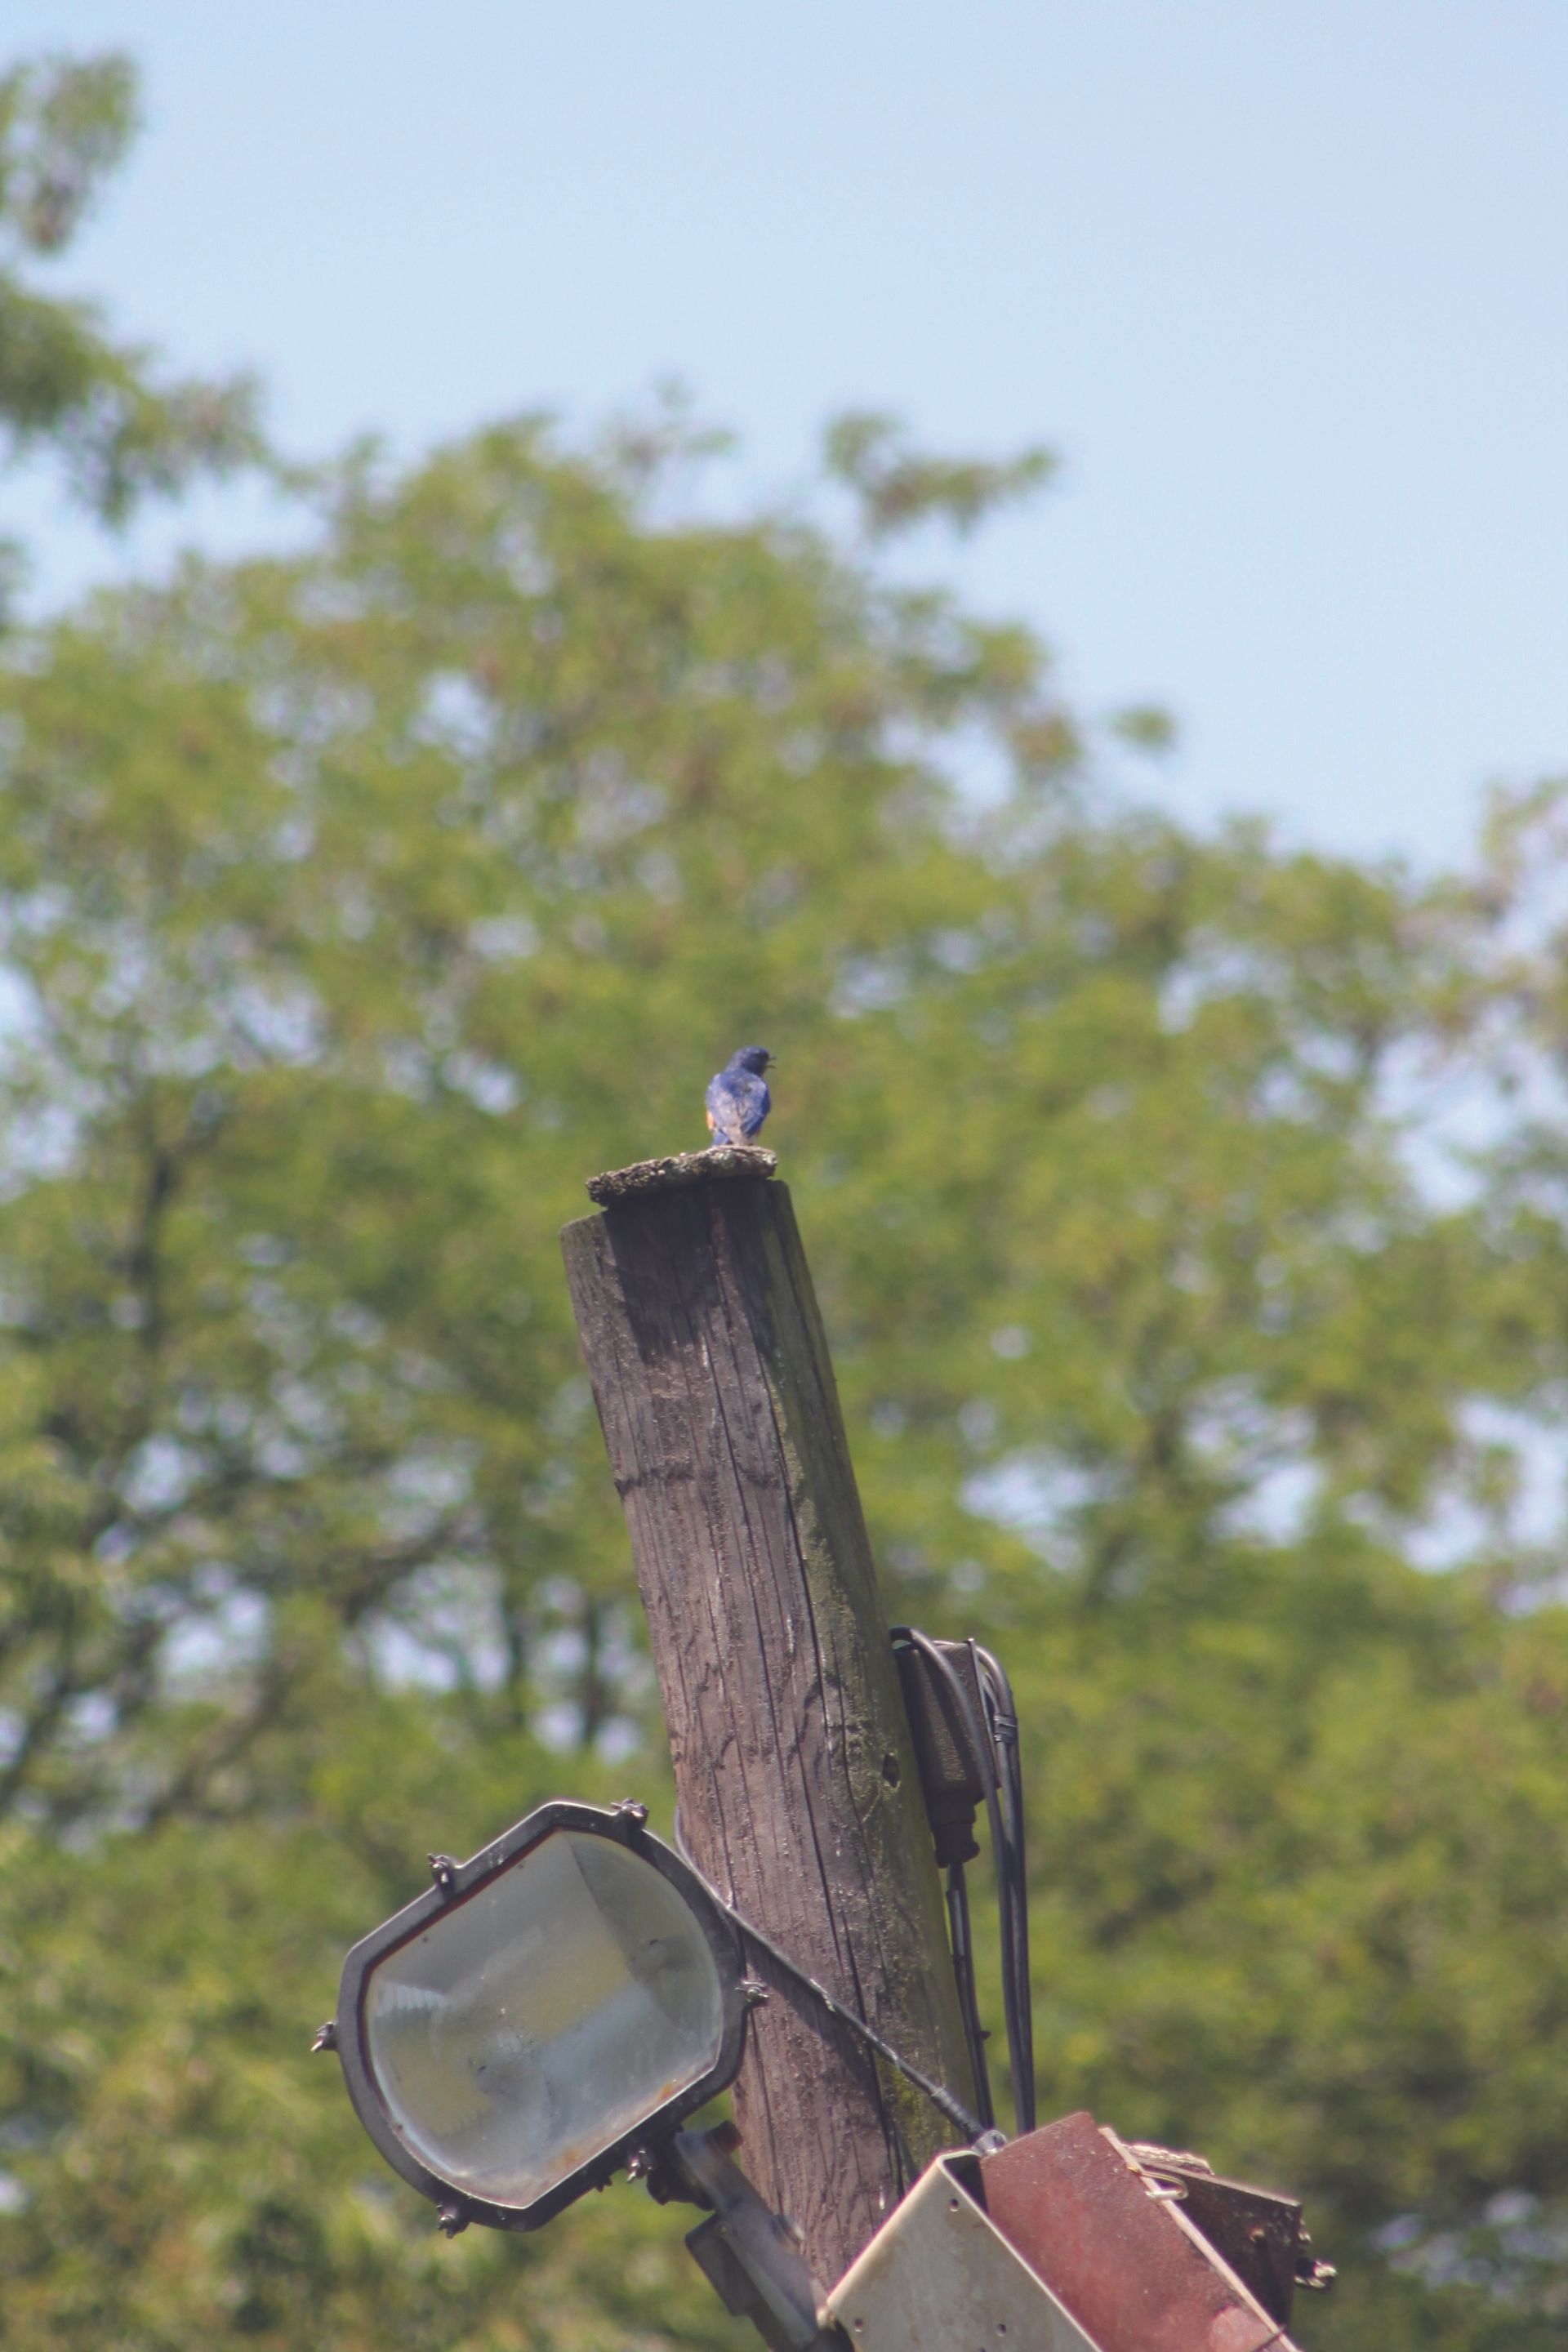 The Eastern Bluebird, a common field inhabitant